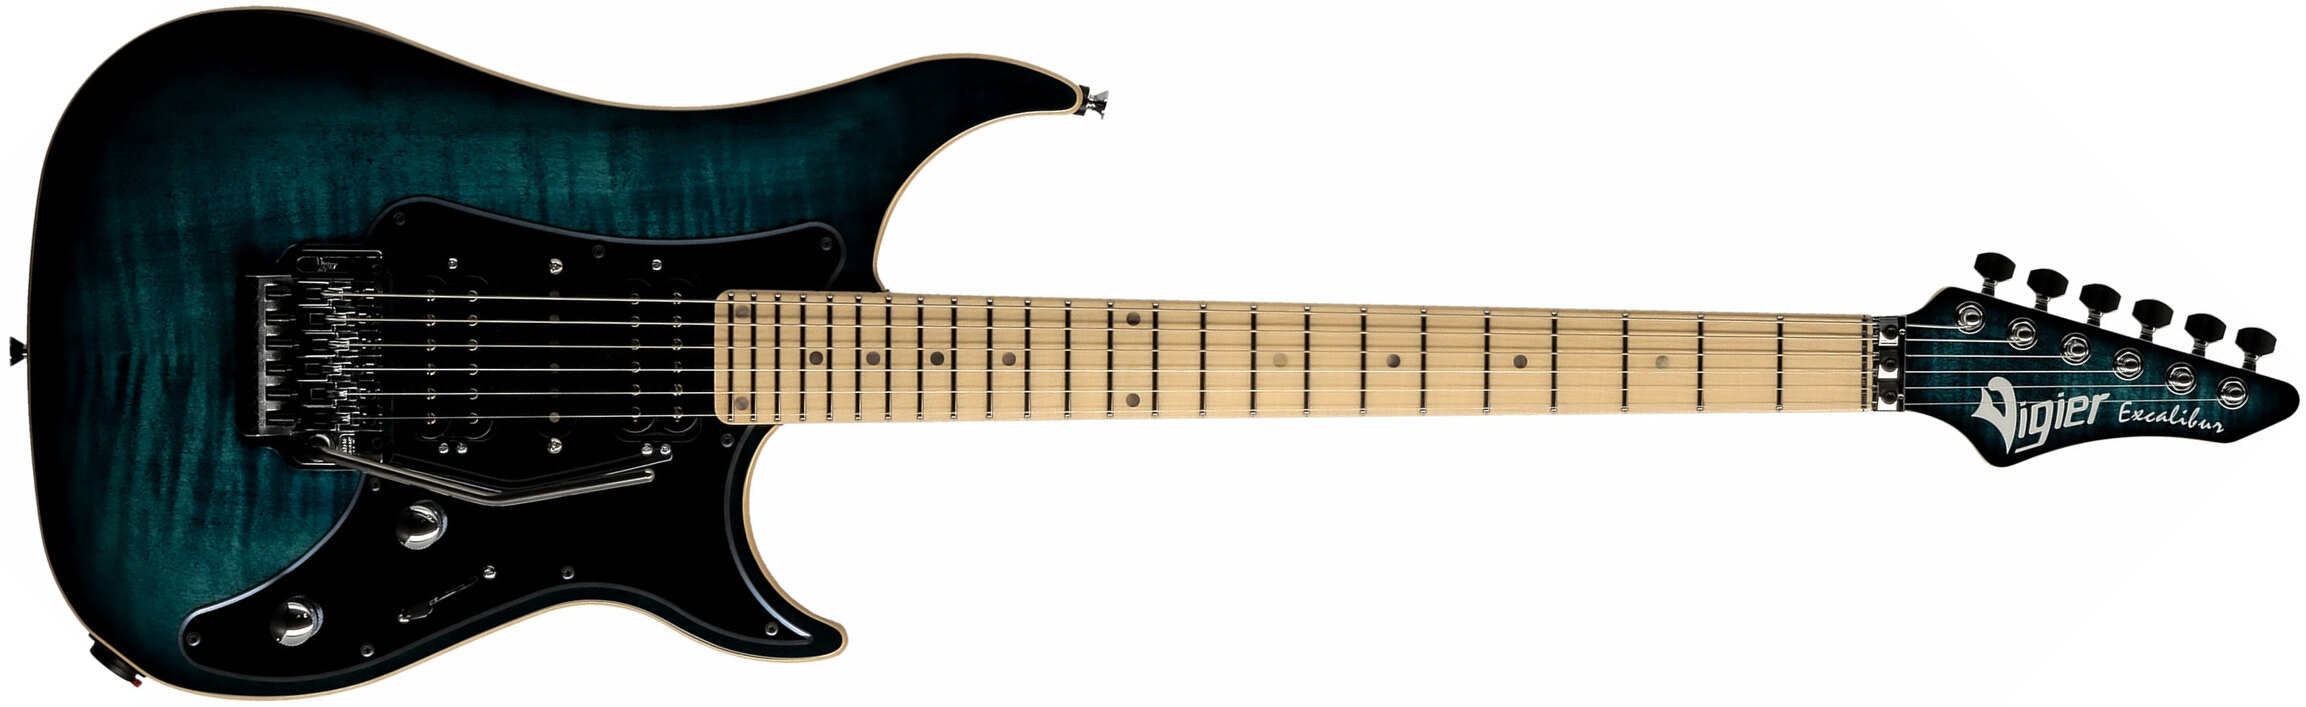 Vigier Excalibur Custom Hsh Fr Mn - Mysterious Blue - Str shape electric guitar - Main picture